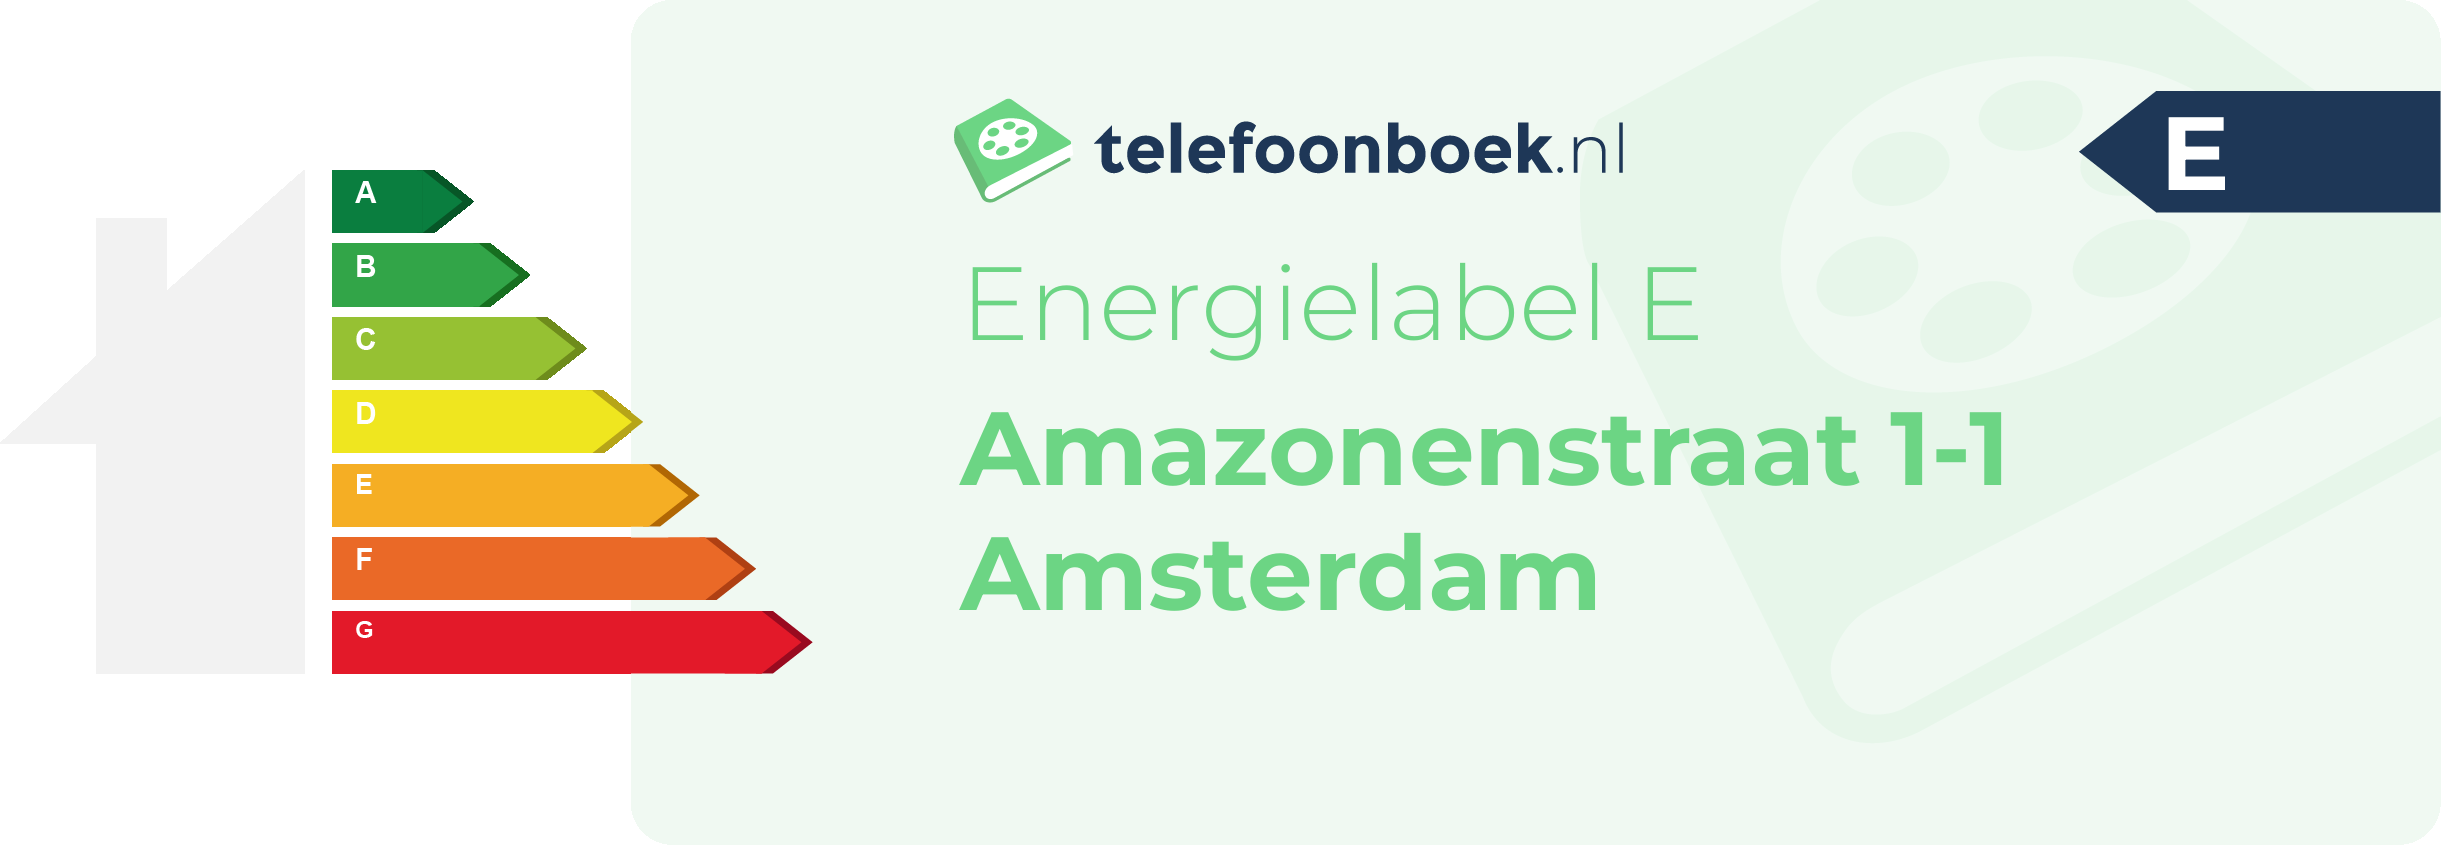 Energielabel Amazonenstraat 1-1 Amsterdam